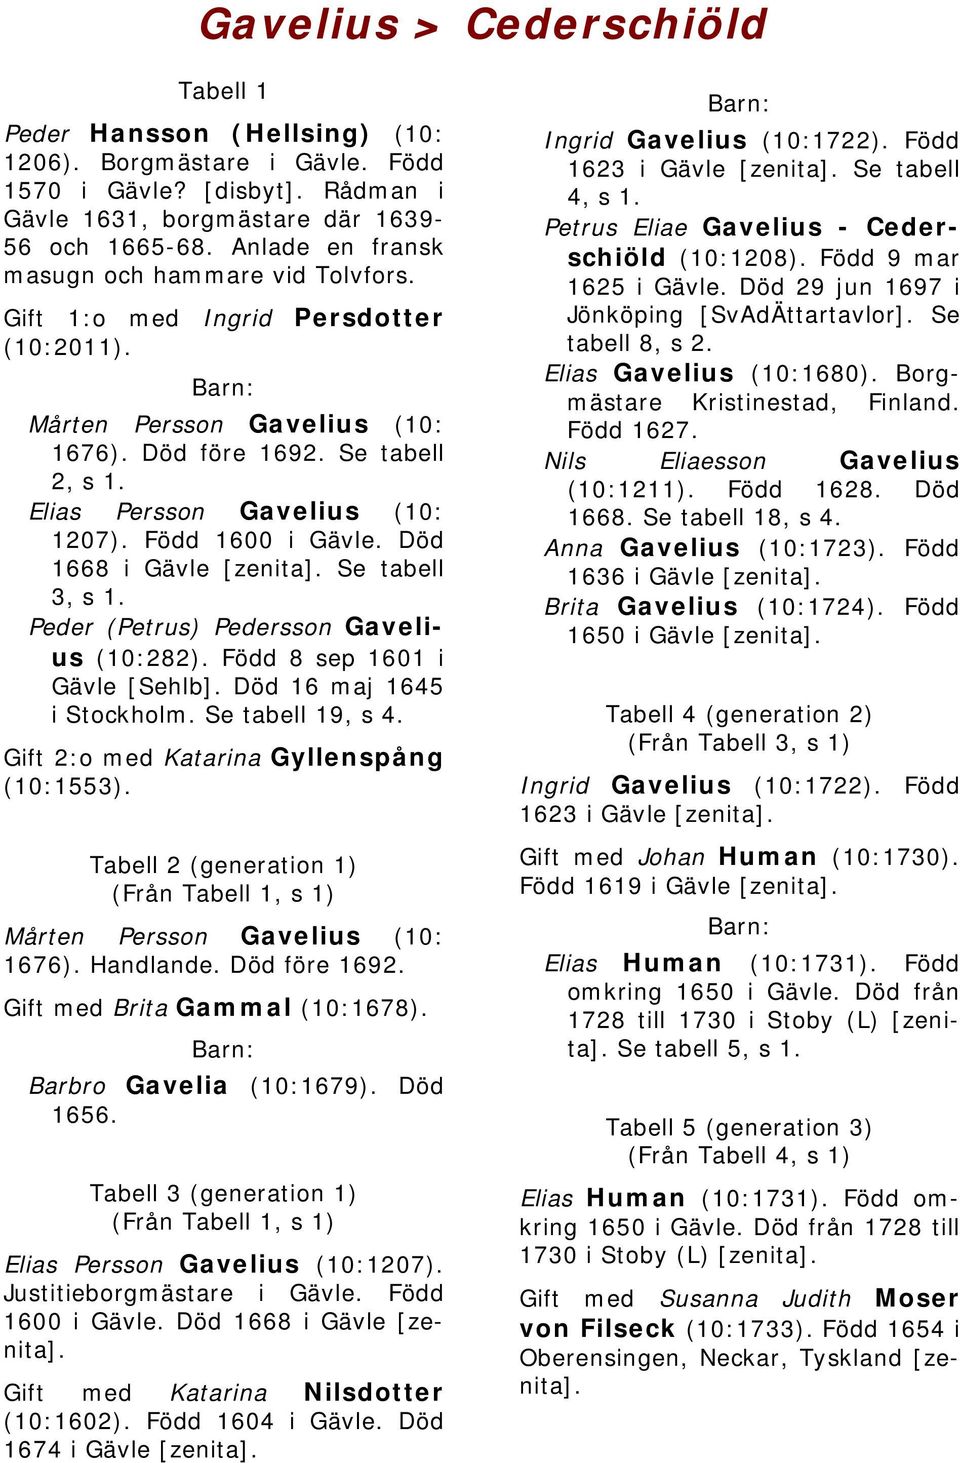 Född 1600 i Gävle. Död 1668 i Gävle [zenita]. Se tabell 3, s 1. Peder (Petrus) Pedersson Gavelius (10:282). Född 8 sep 1601 i Gävle [Sehlb]. Död 16 maj 1645 i Stockholm. Se tabell 19, s 4.